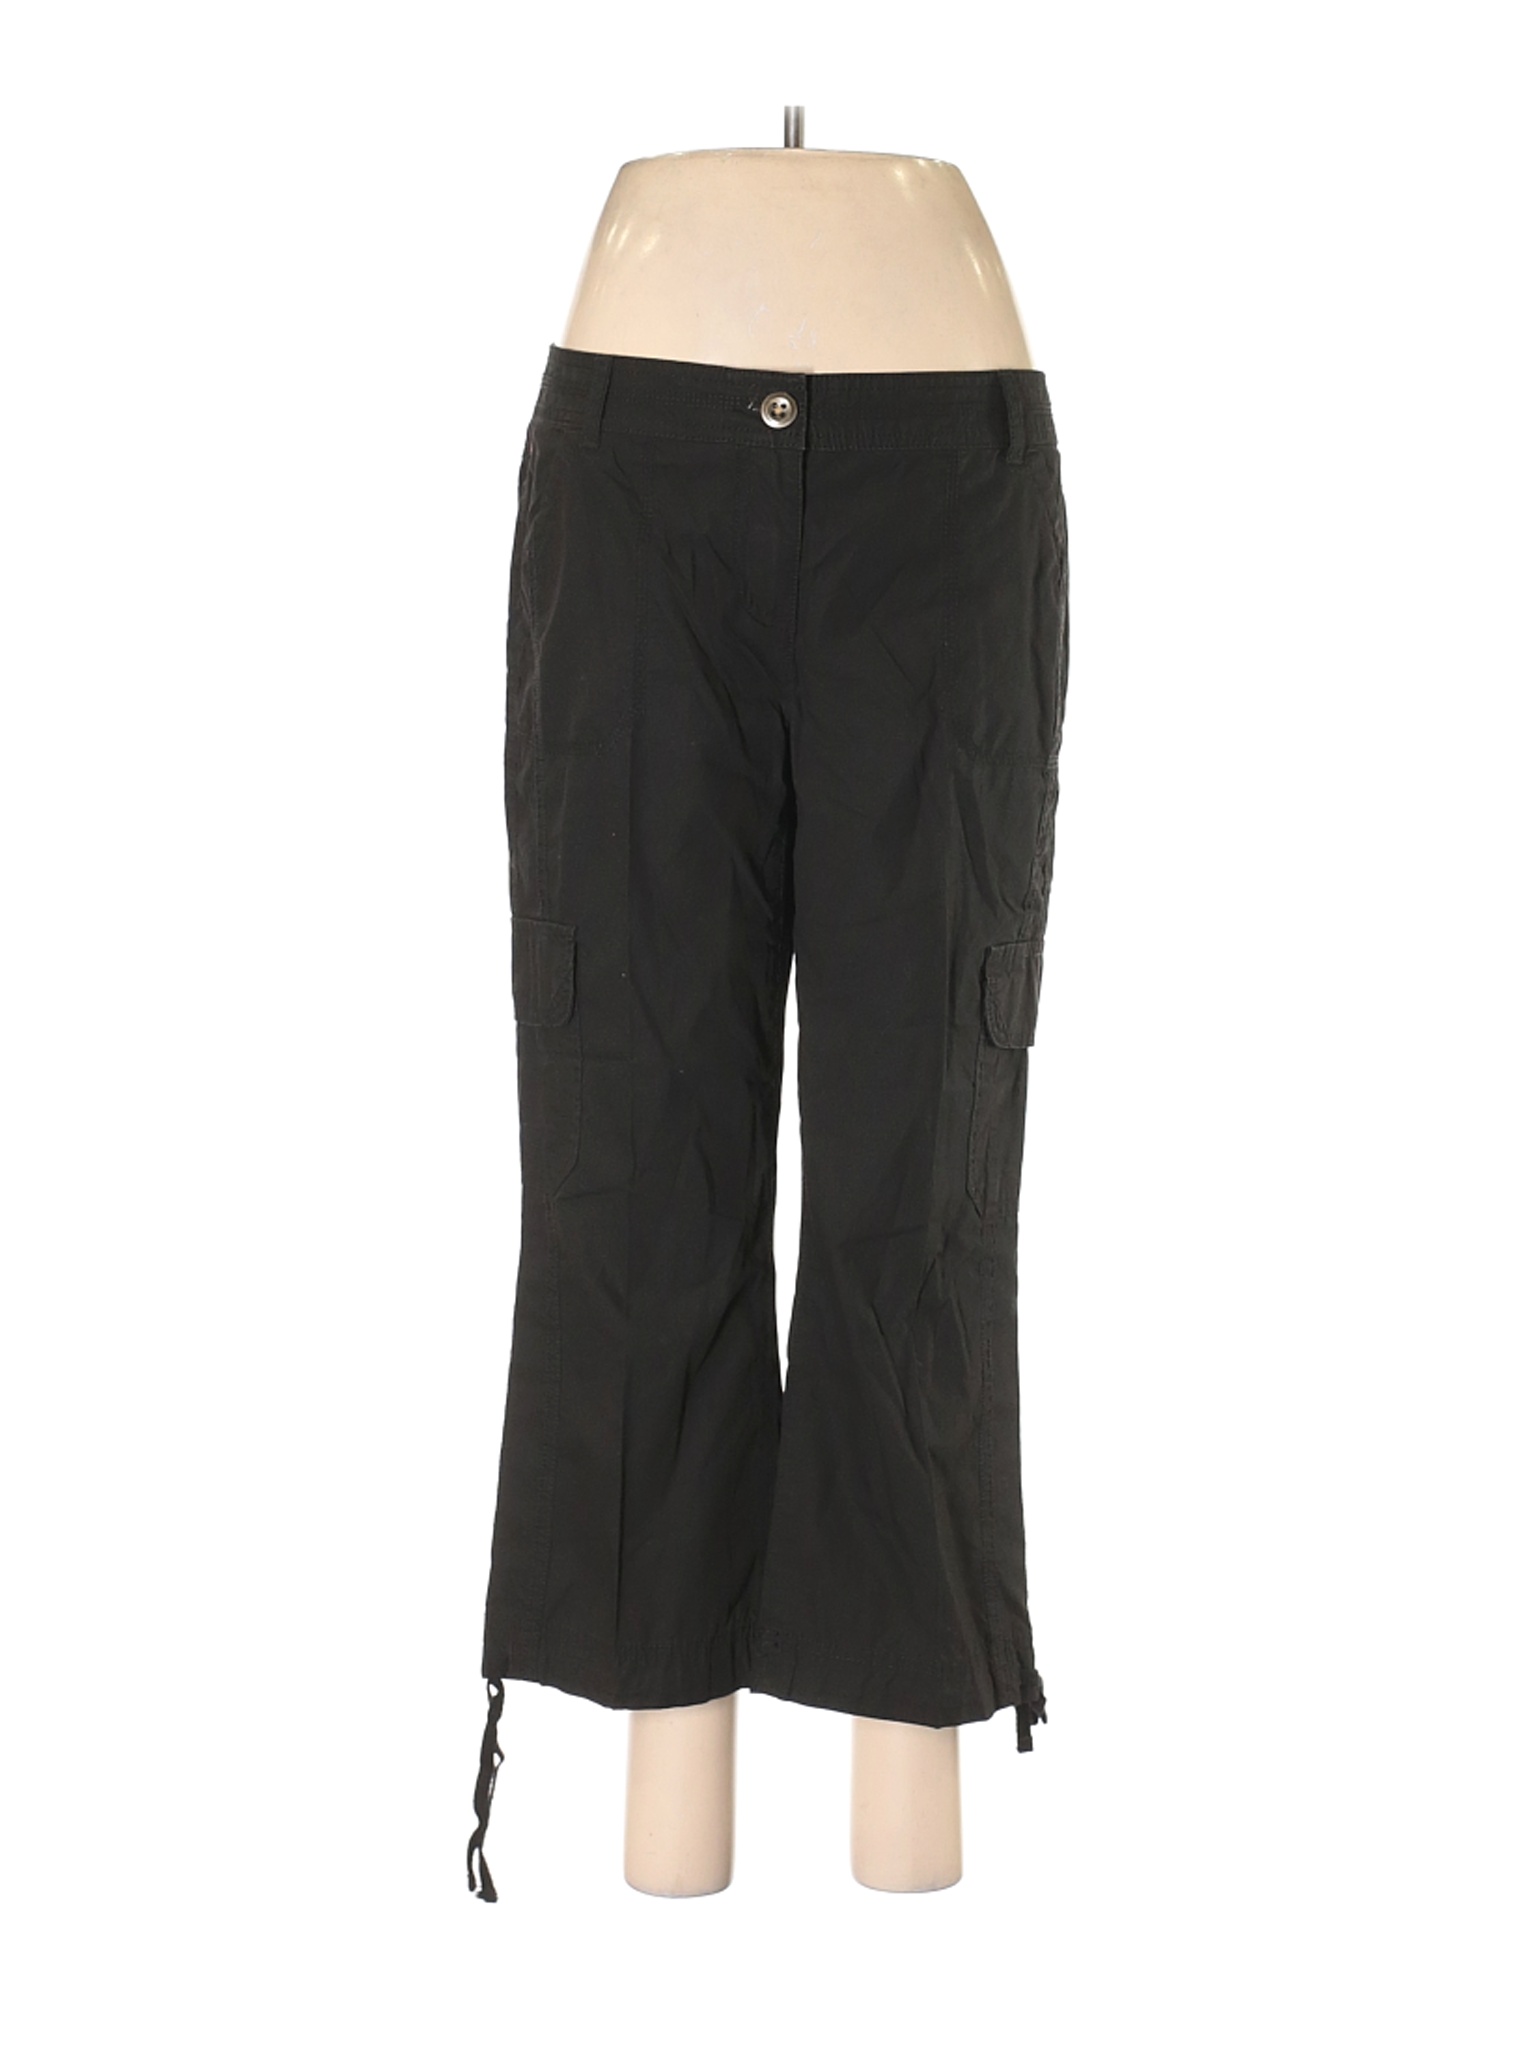 Tommy Hilfiger Women Black Cargo Pants 6 | eBay